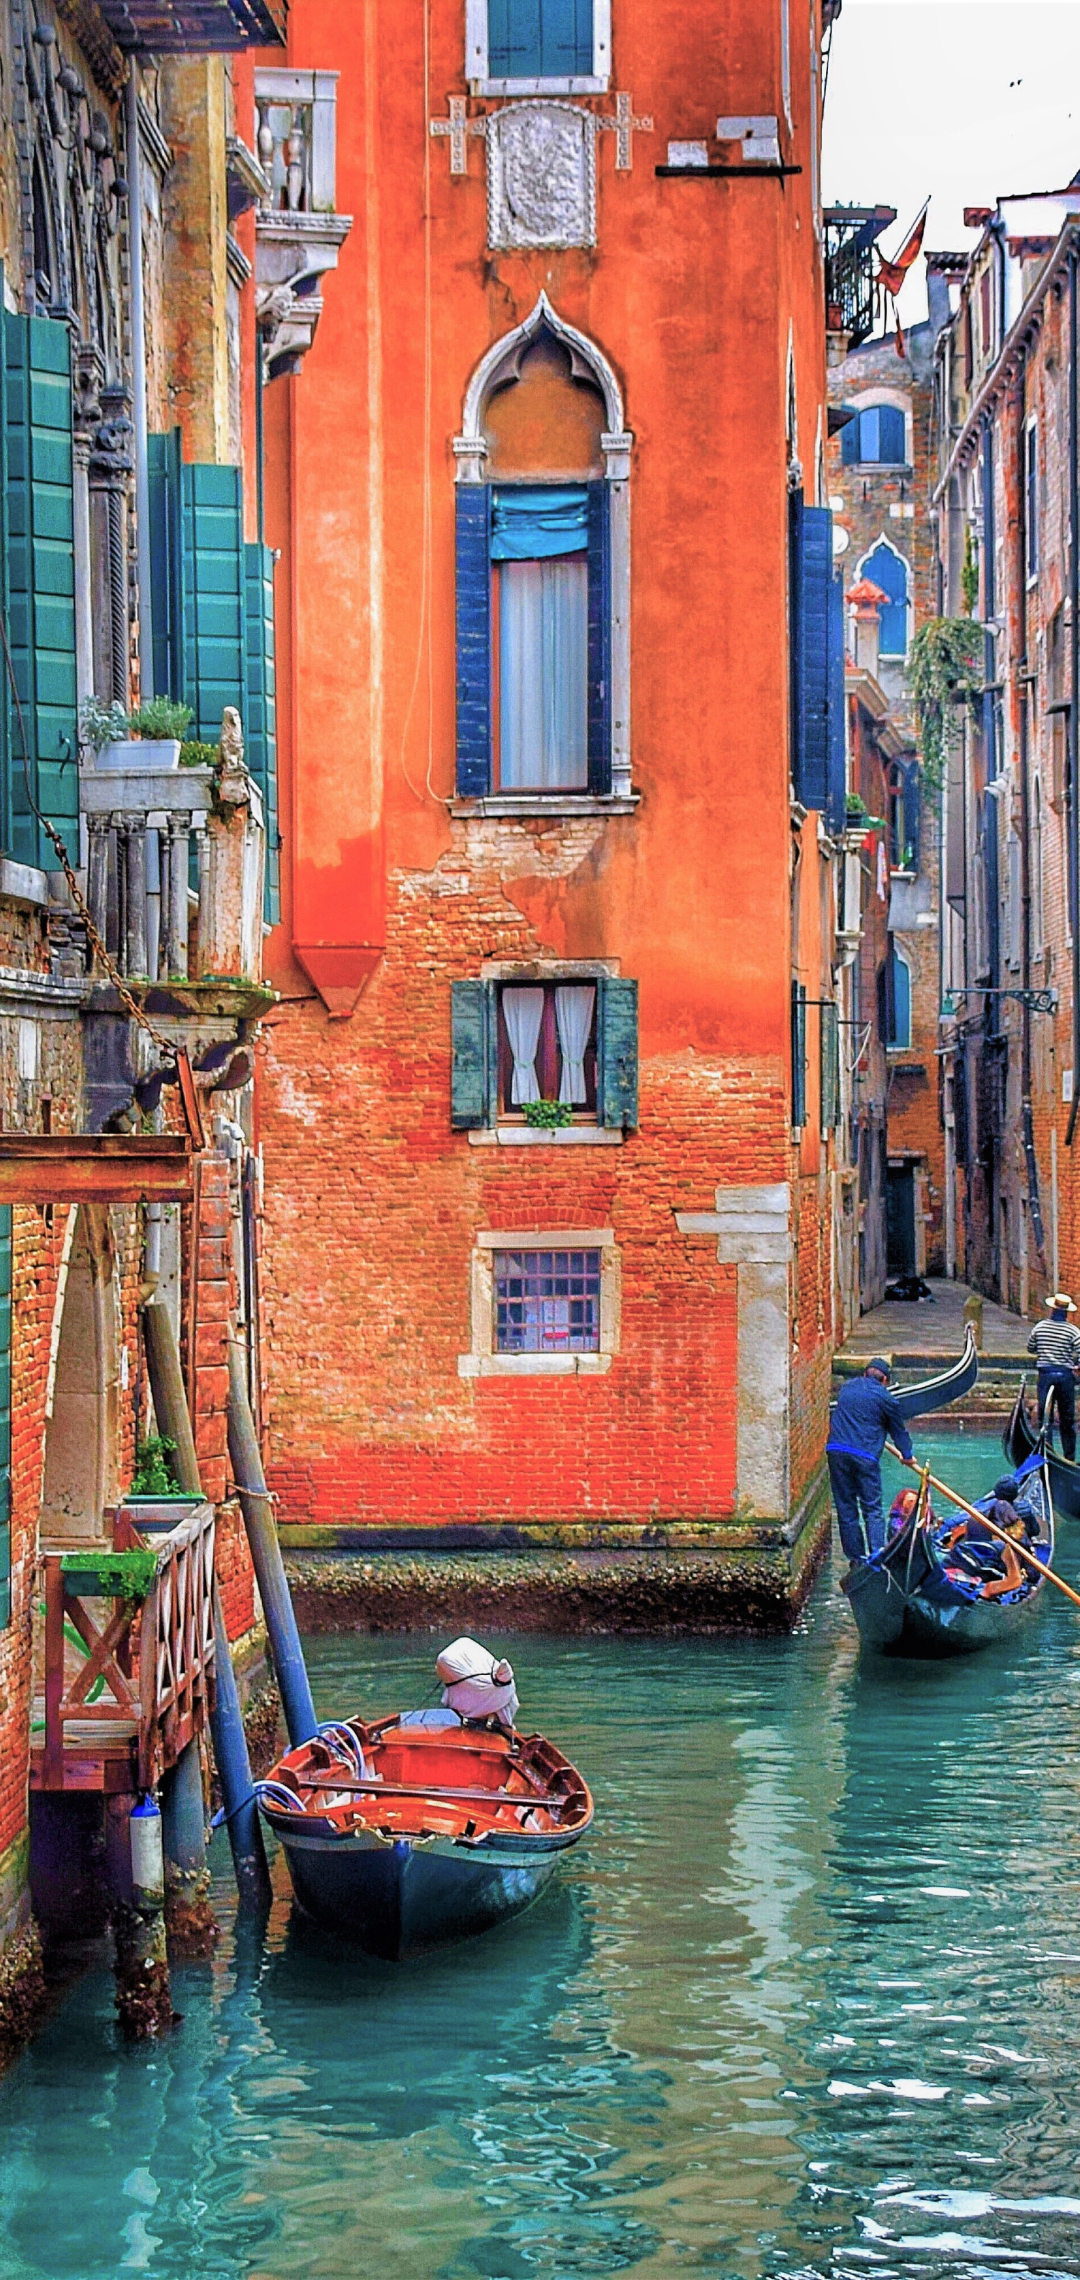 Handy-Wallpaper Städte, Italien, Venedig, Gebäude, Bunt, Kanal, Gondel, Menschengemacht kostenlos herunterladen.